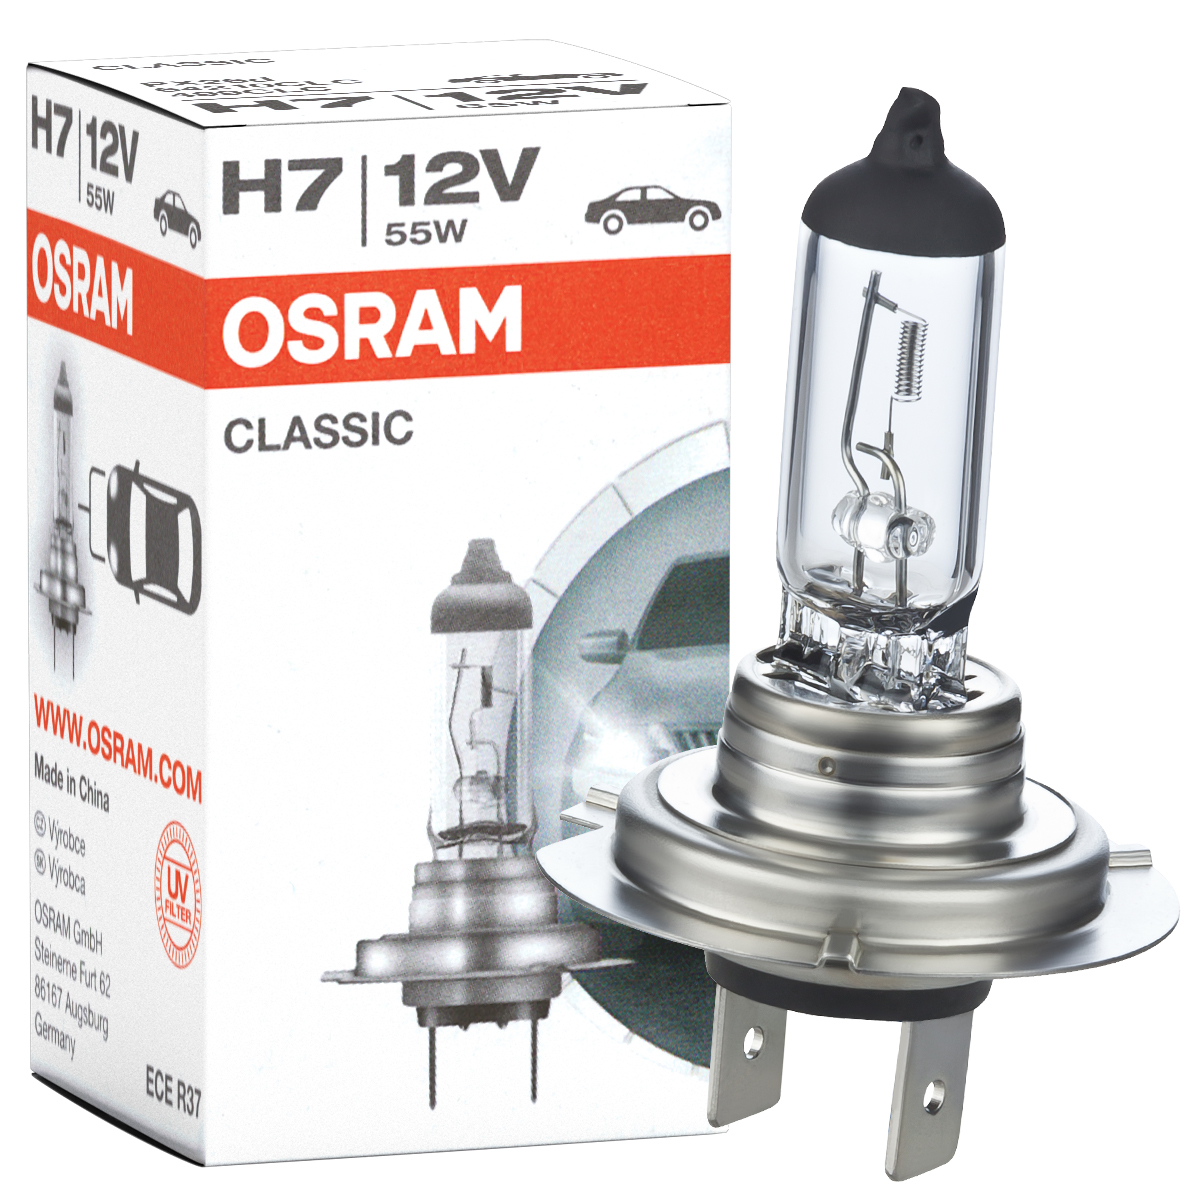 Osram GLL H7 Durostar 12V 60/55W Beleuchtung